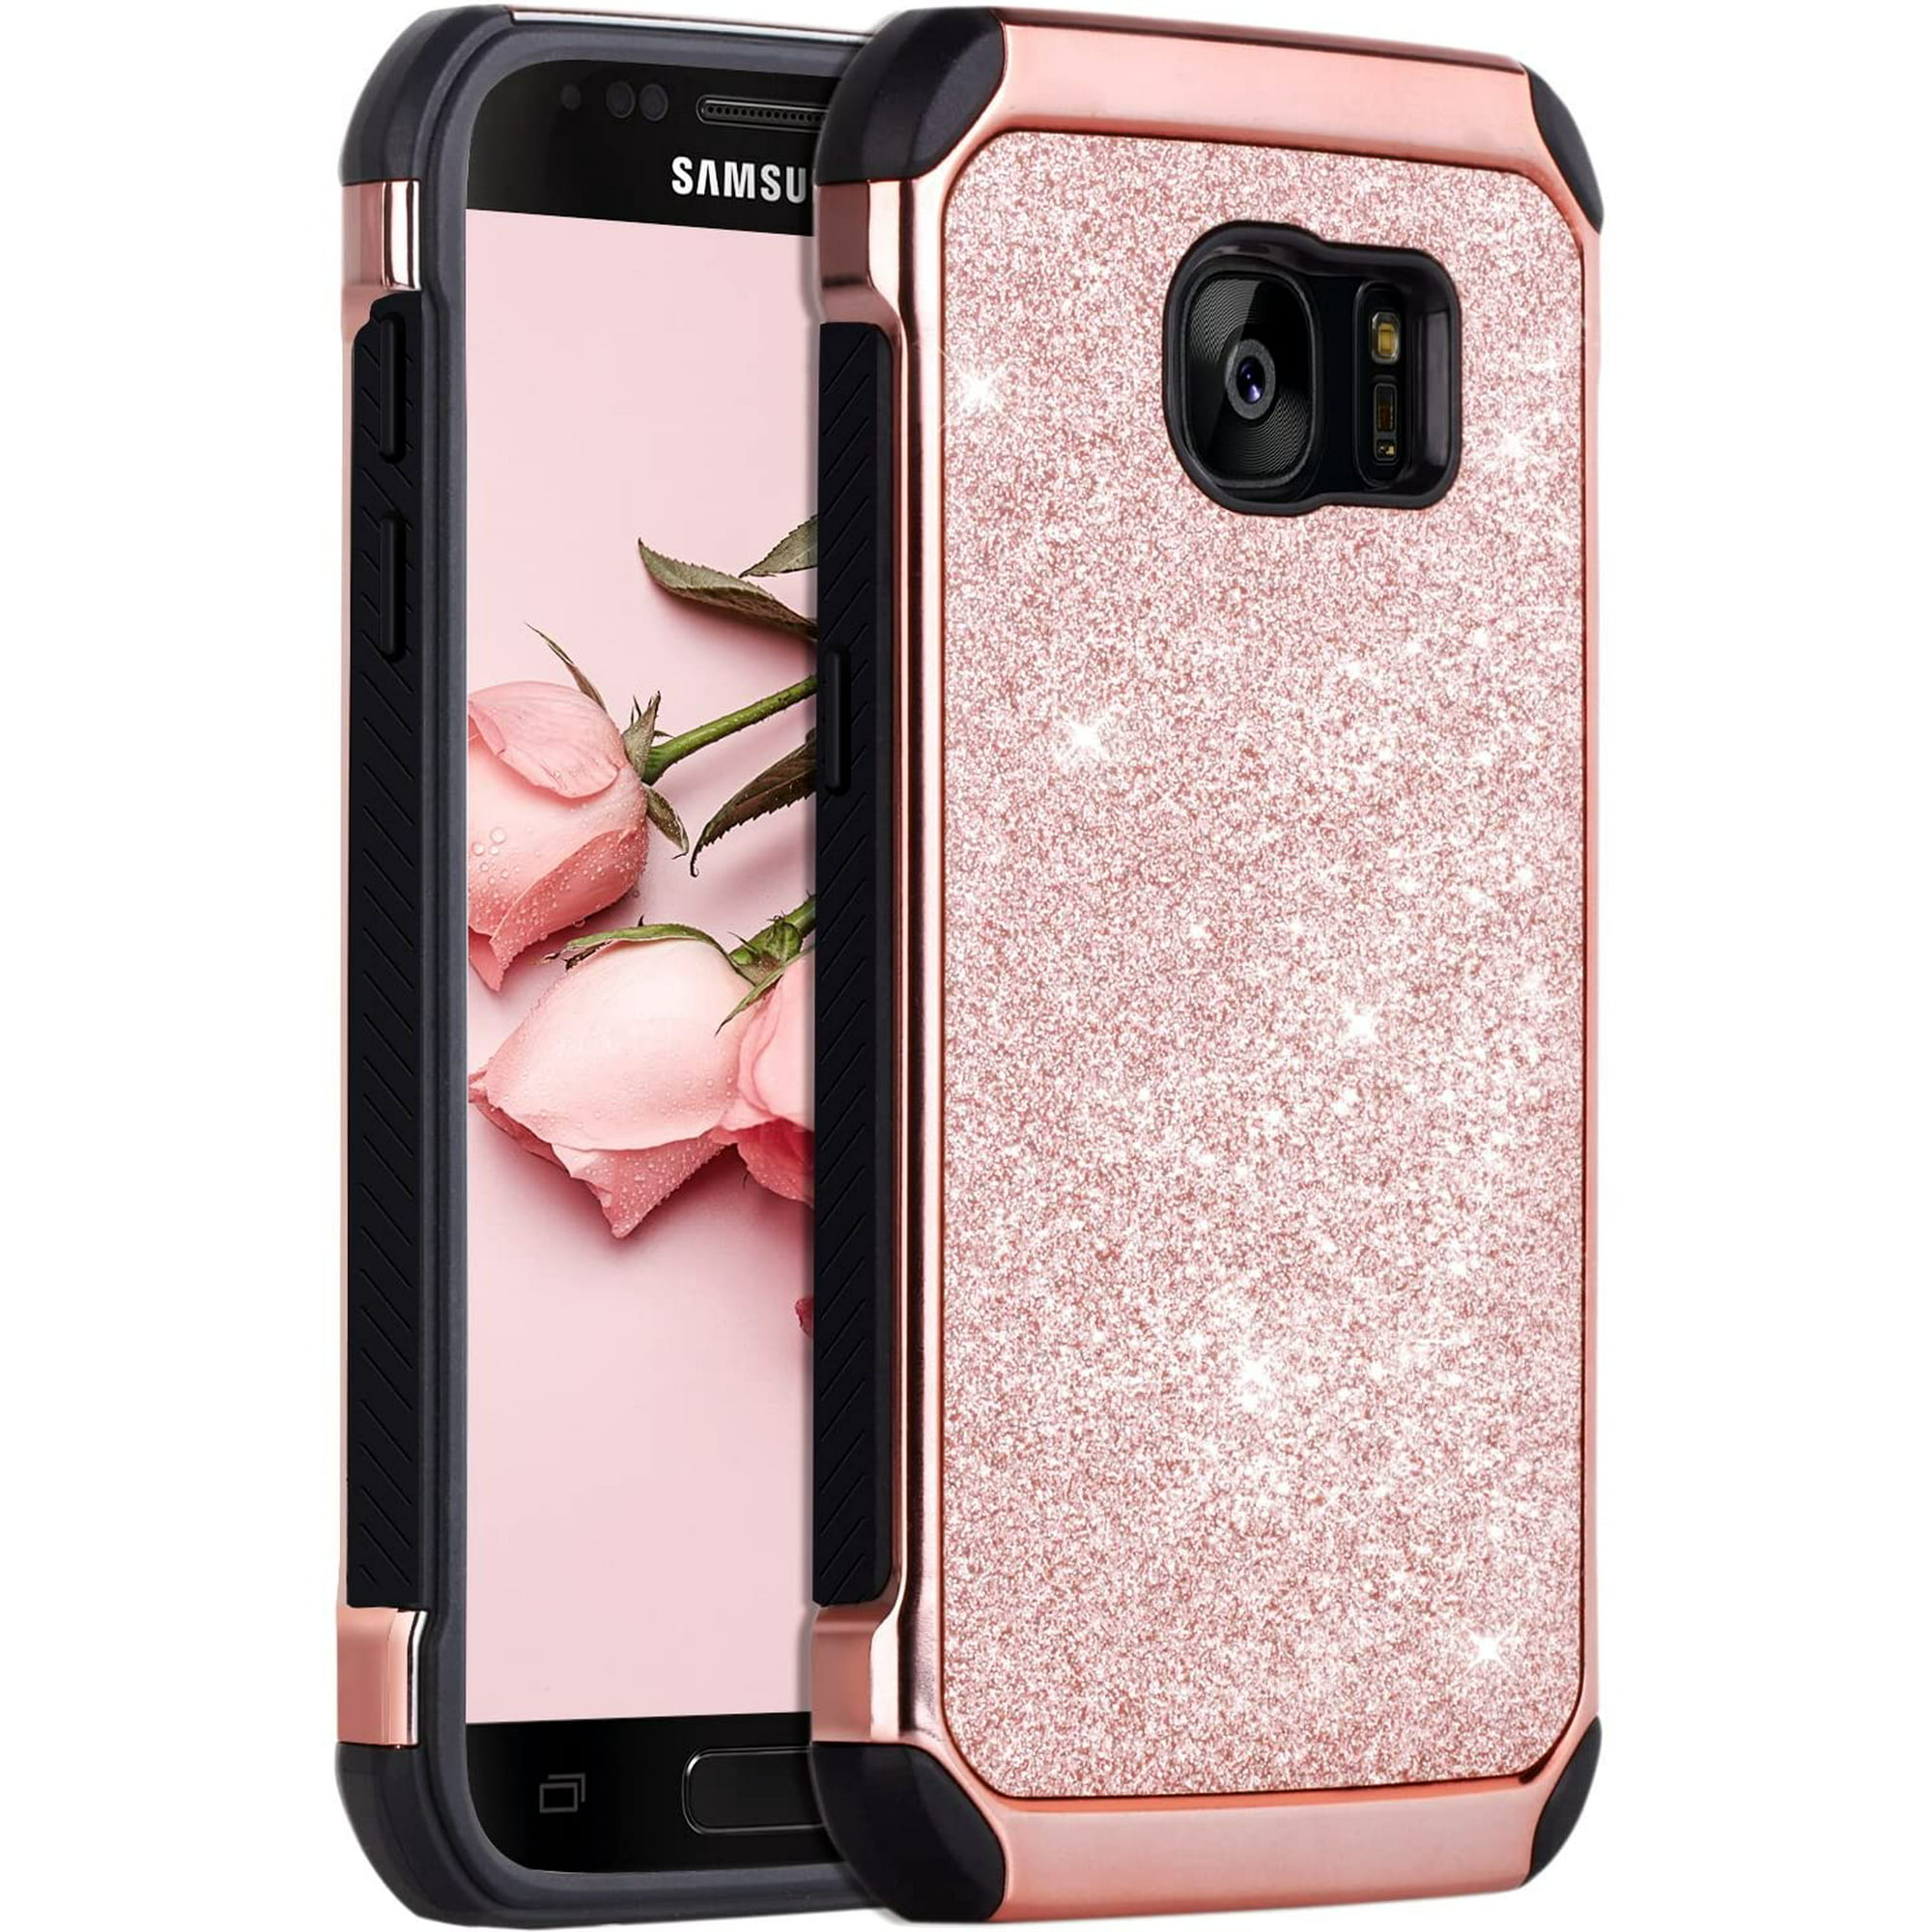 Vertolking Dapper Aarde Galaxy S7 Case, Samsung S7 Phone Case, BENTOBEN 2 in 1 Slim Dual layer  Glitter Bling Hybrid Hard Cover Soft Rubber | Walmart Canada